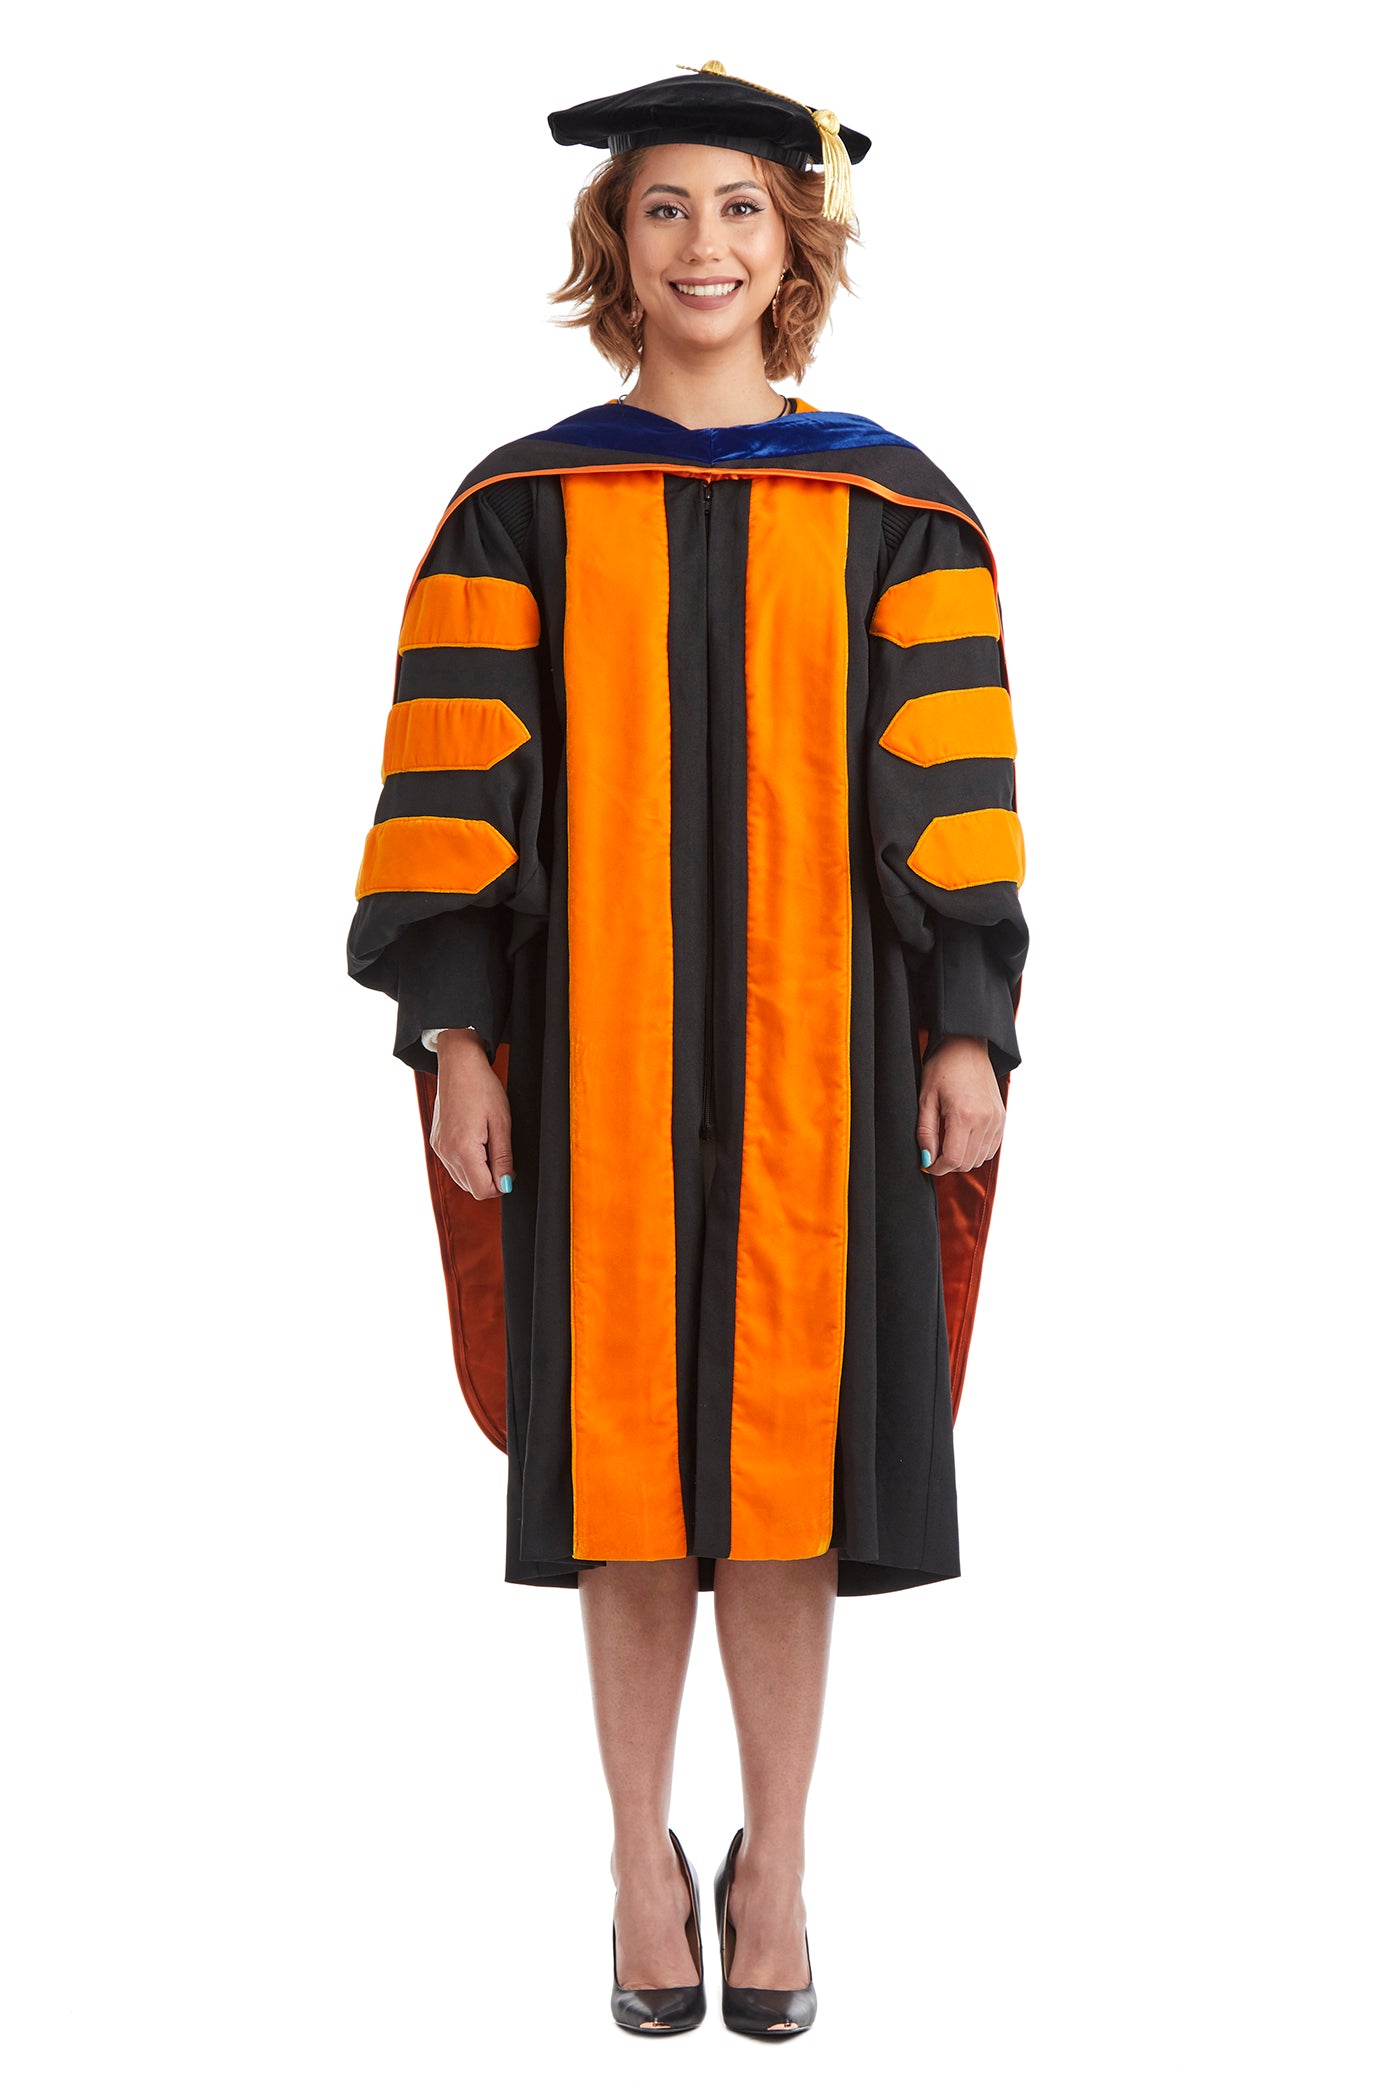 Churchill Gowns UK  Affordable University Graduation Attire